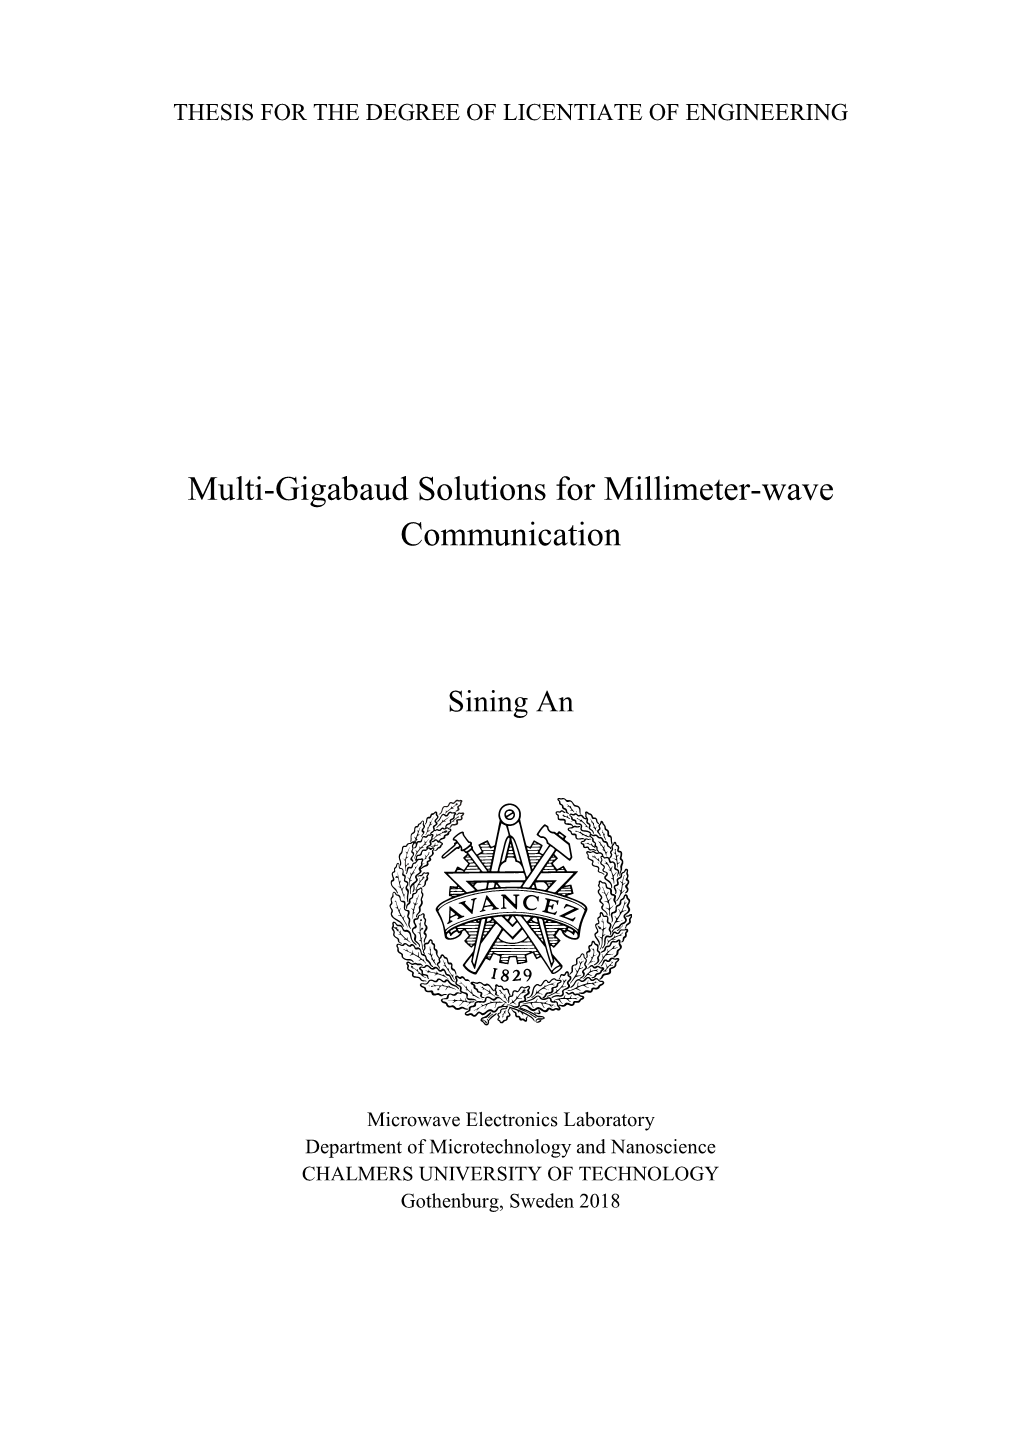 Multi-Gigabaud Solutions for Millimeter-Wave Communication